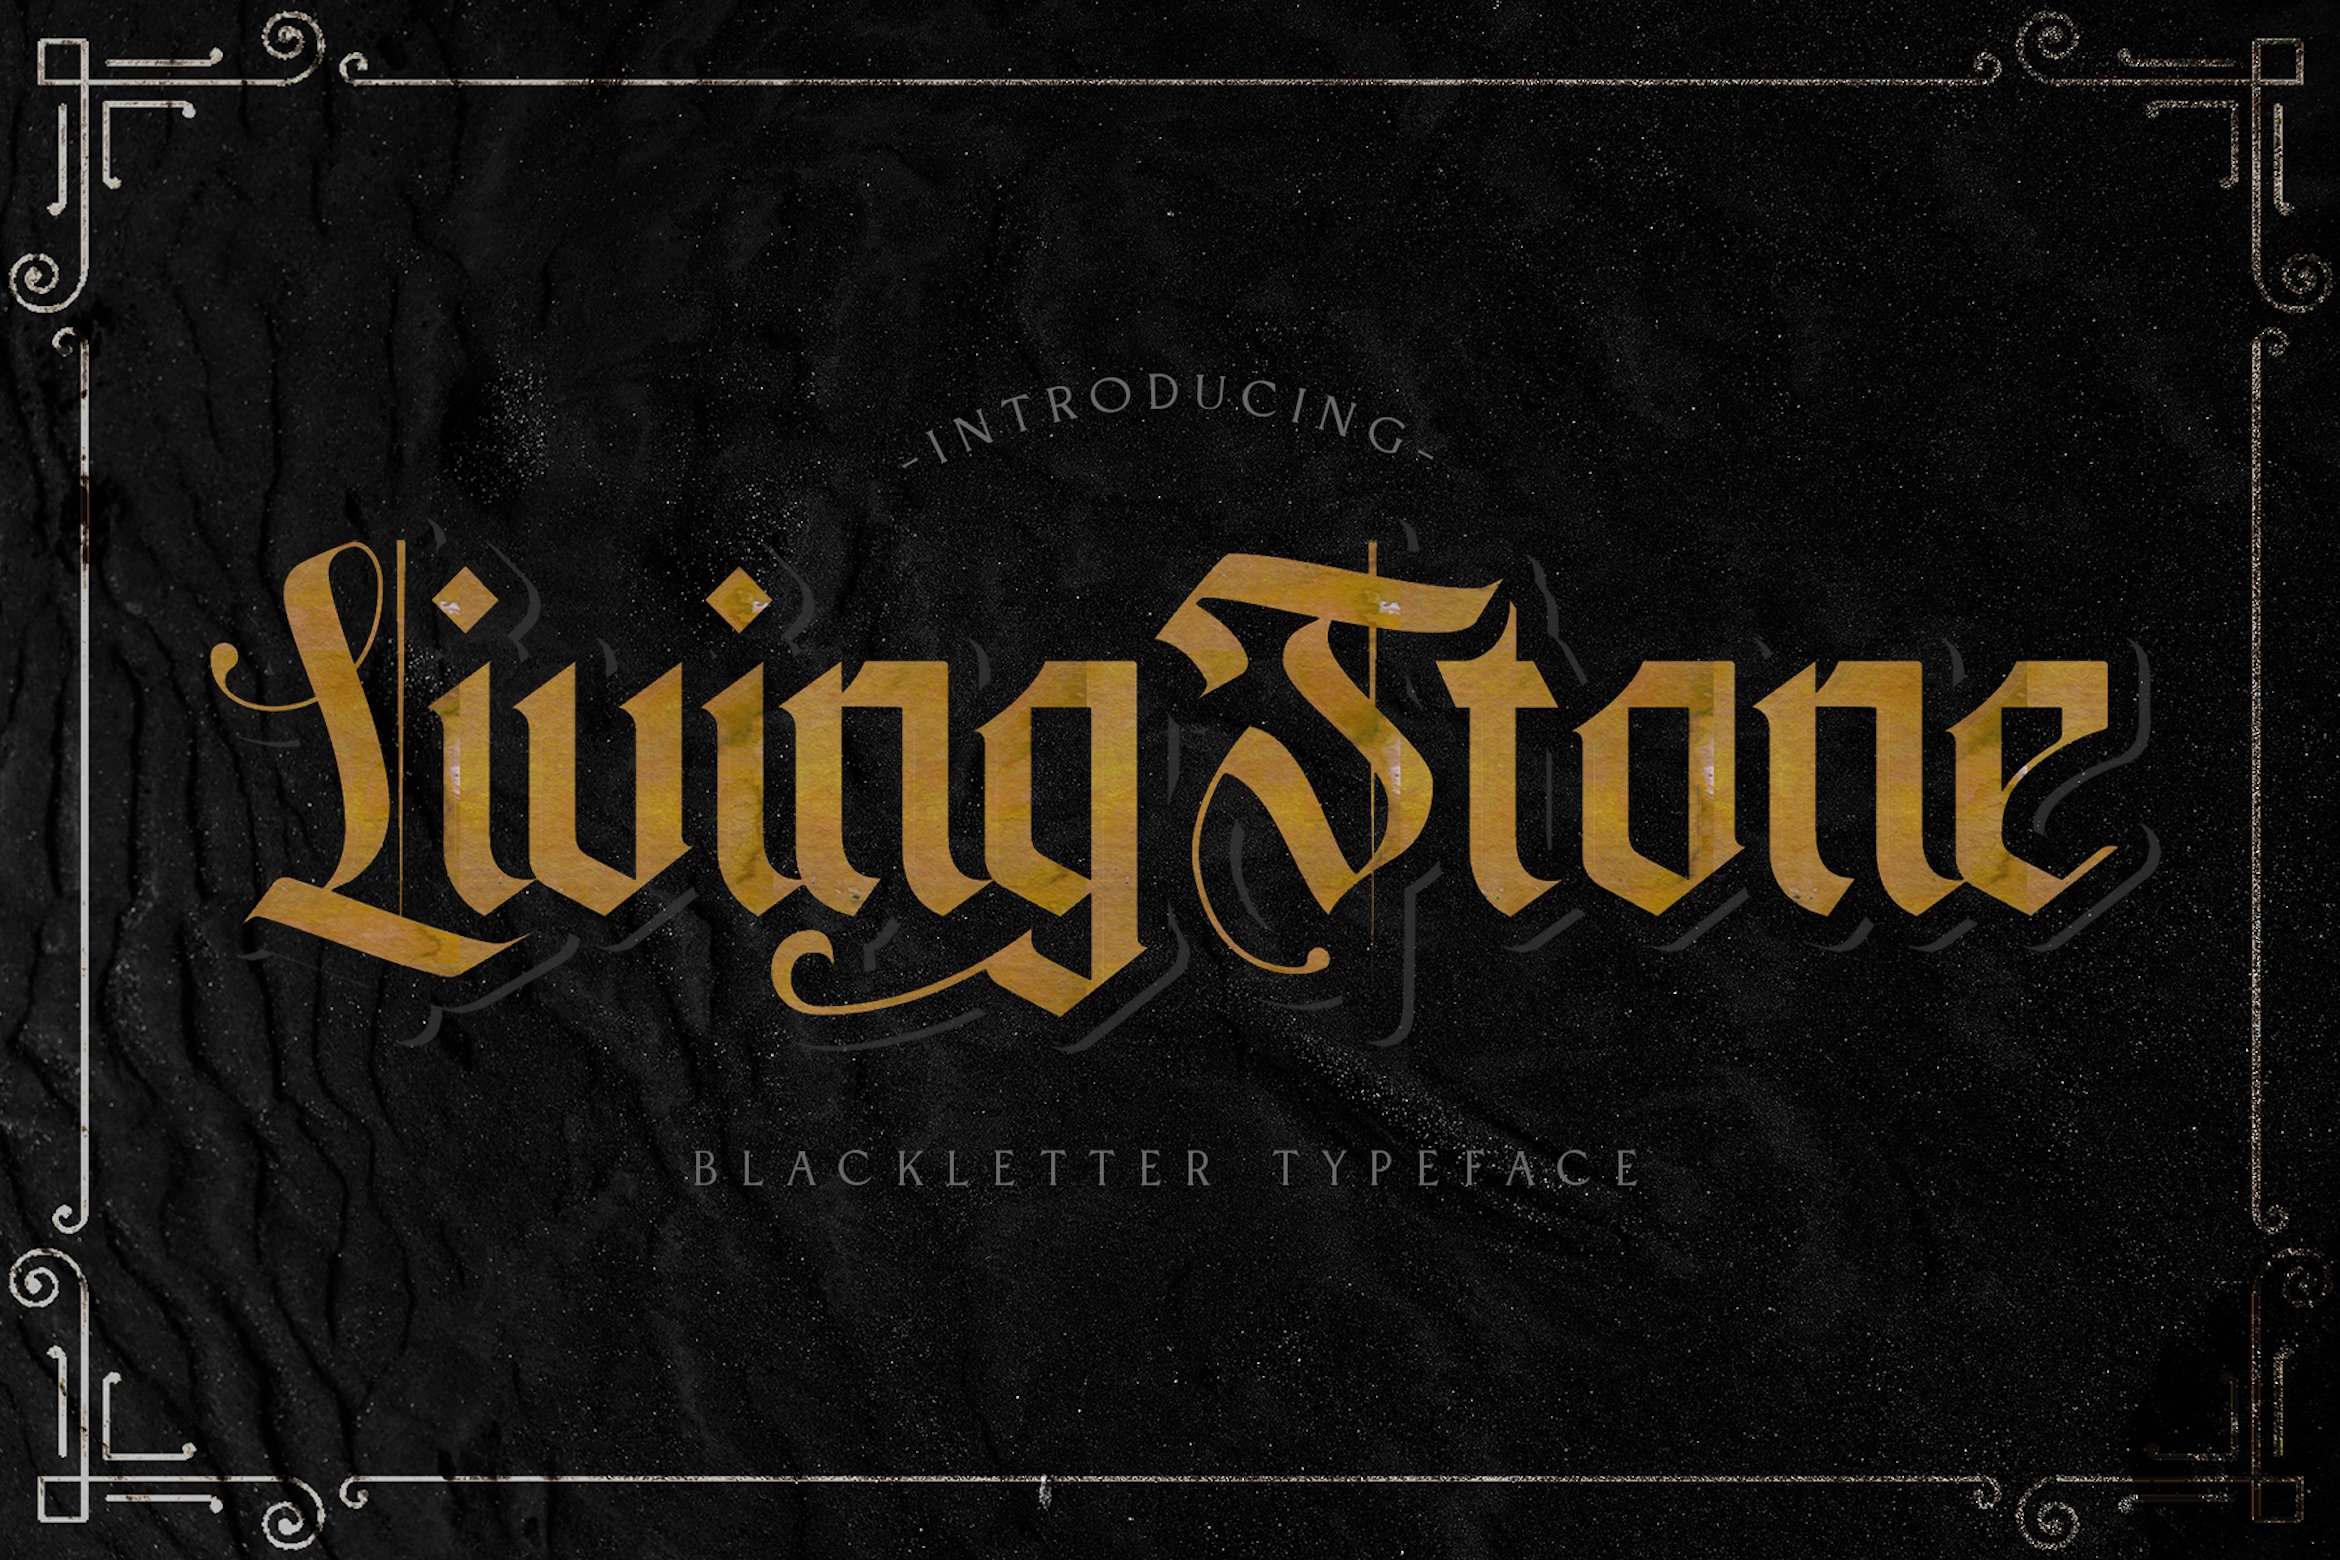 Livingstone - Blackletter Font cover image.